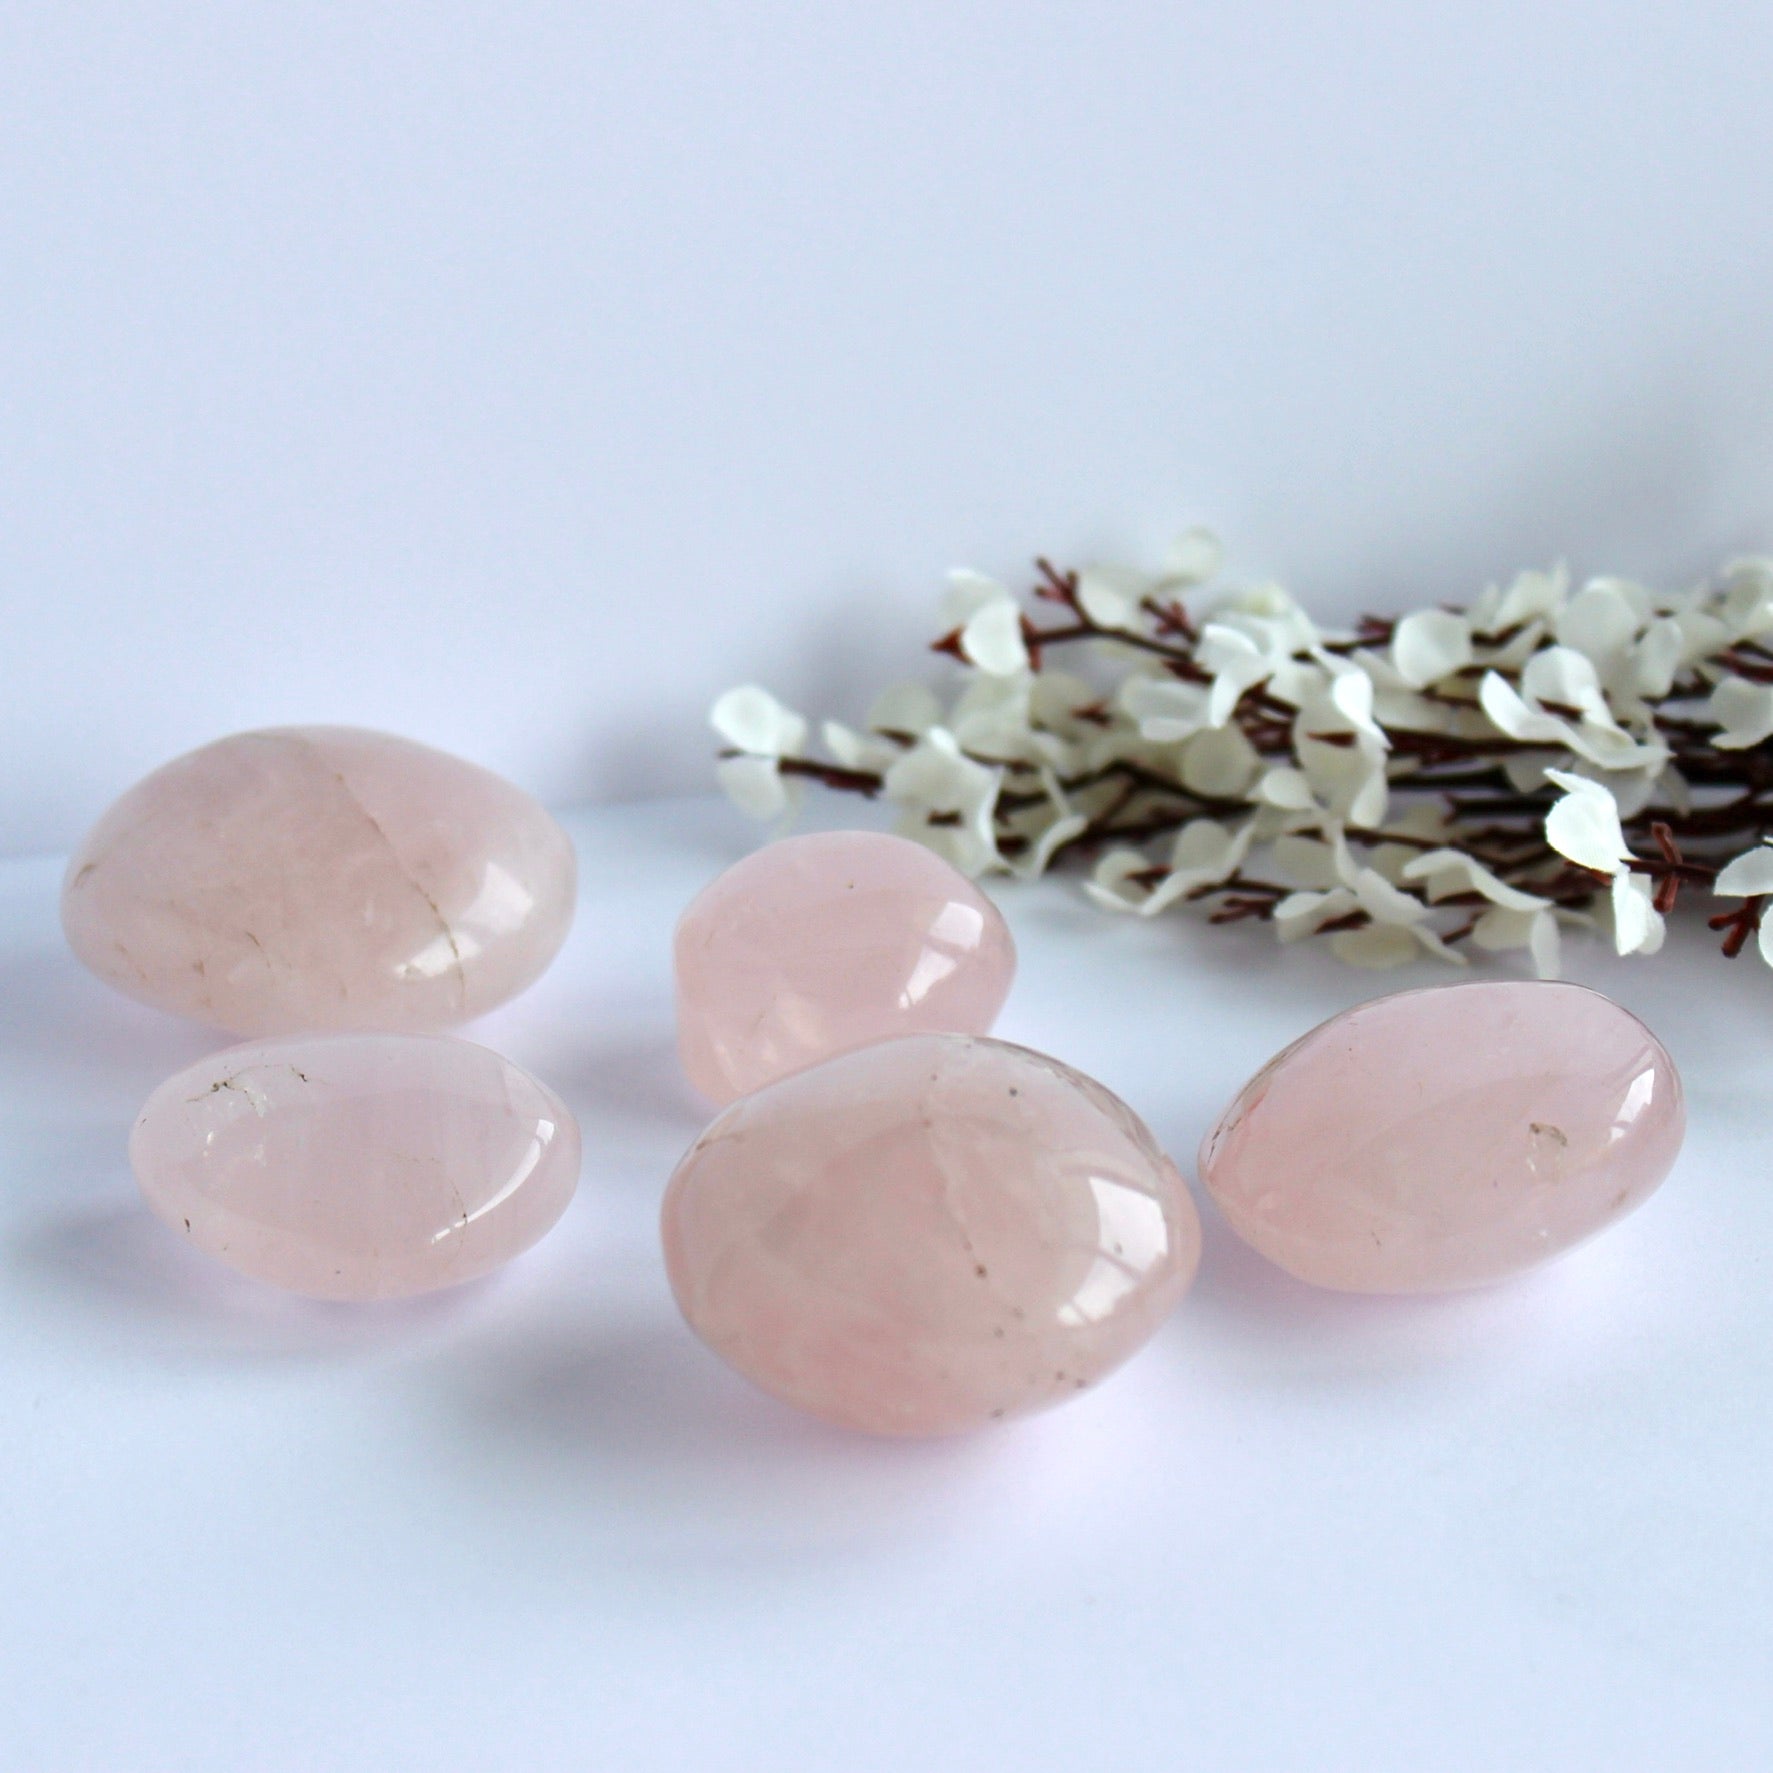 Rose Quartz Palm Stone - Conscious Crystals New Zealand Crystal and Spiritual Shop